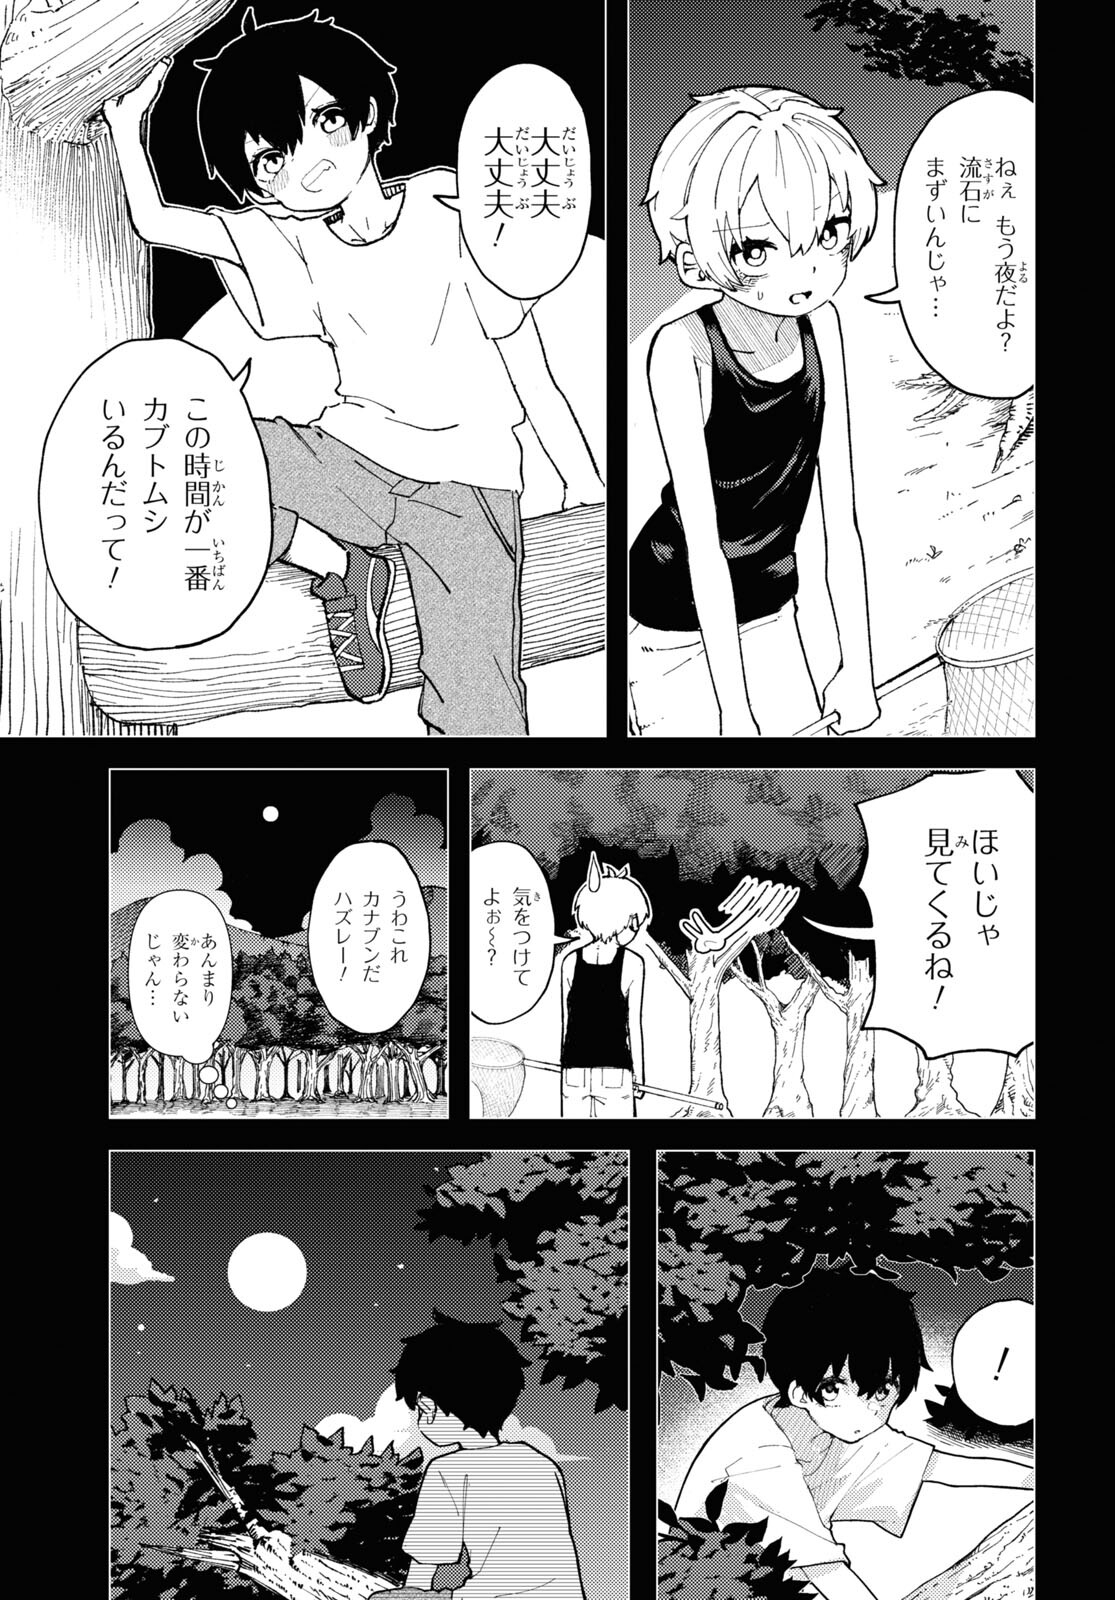 Garuru Girl - Chapter 1 - Page 12